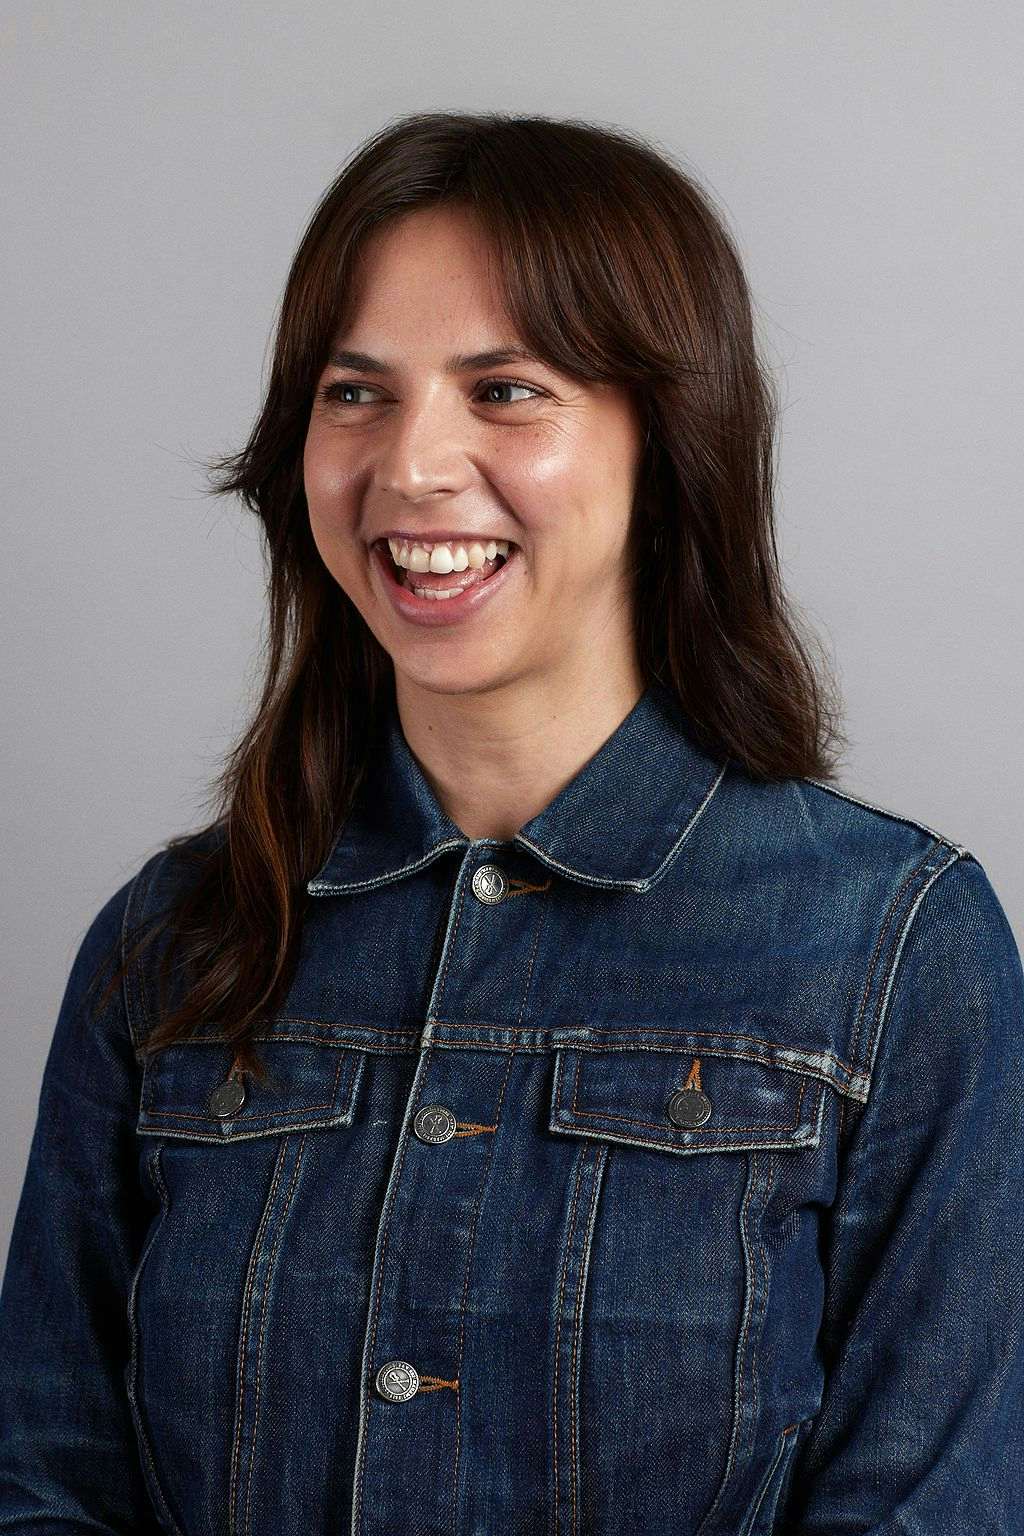 Headshot of Emma smiling and wearing a denim jacket.